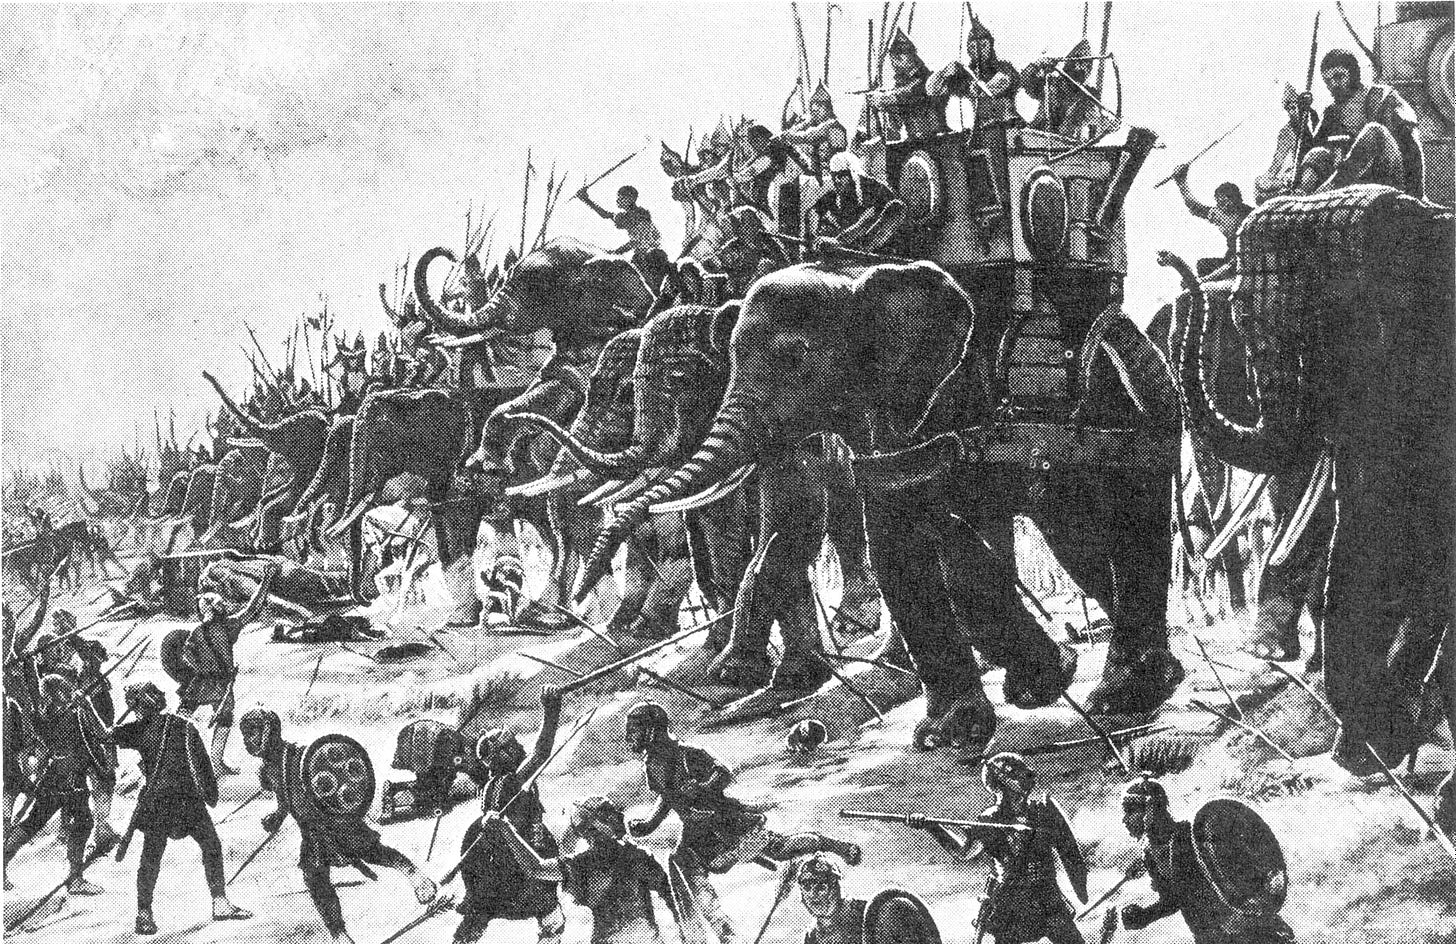 war elephants - Militär Wissen